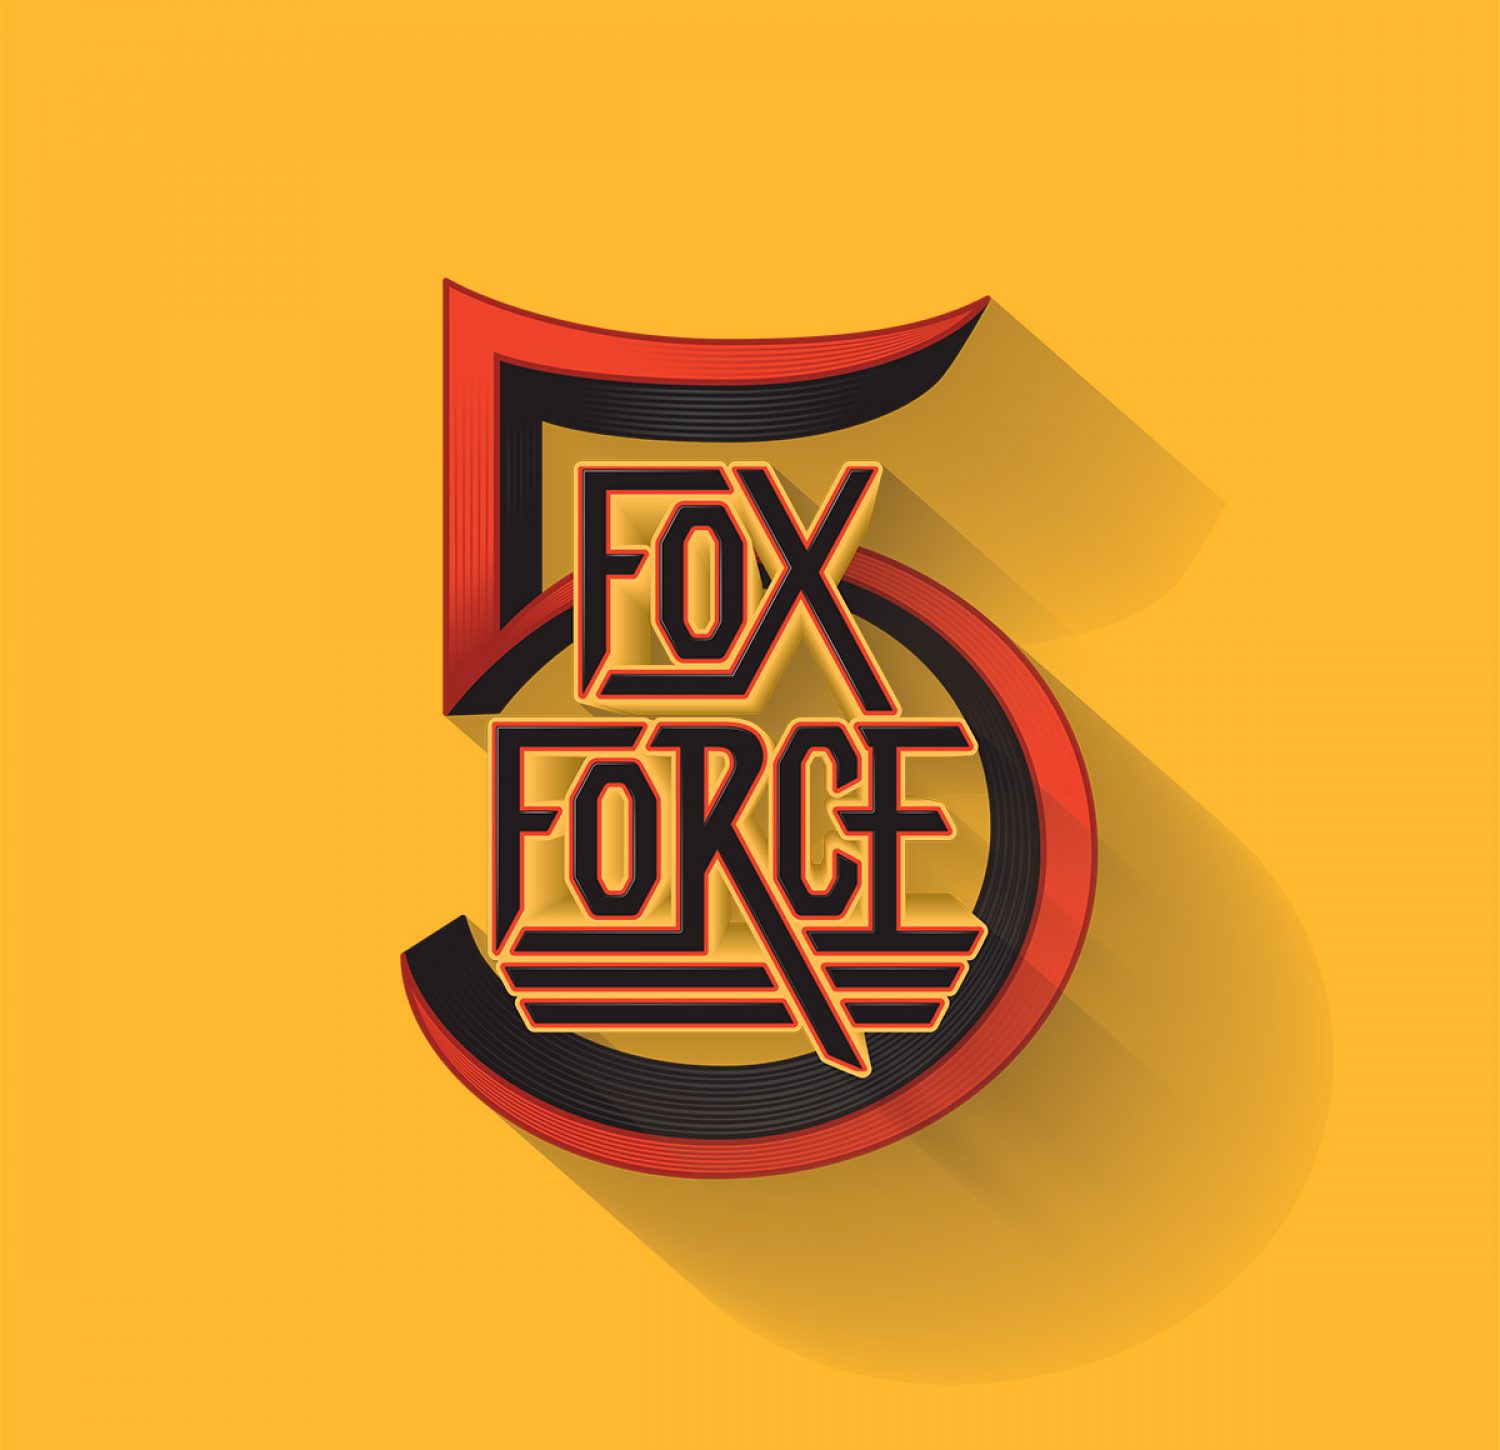 Pulp Fiction Fox Force 5 Lettering